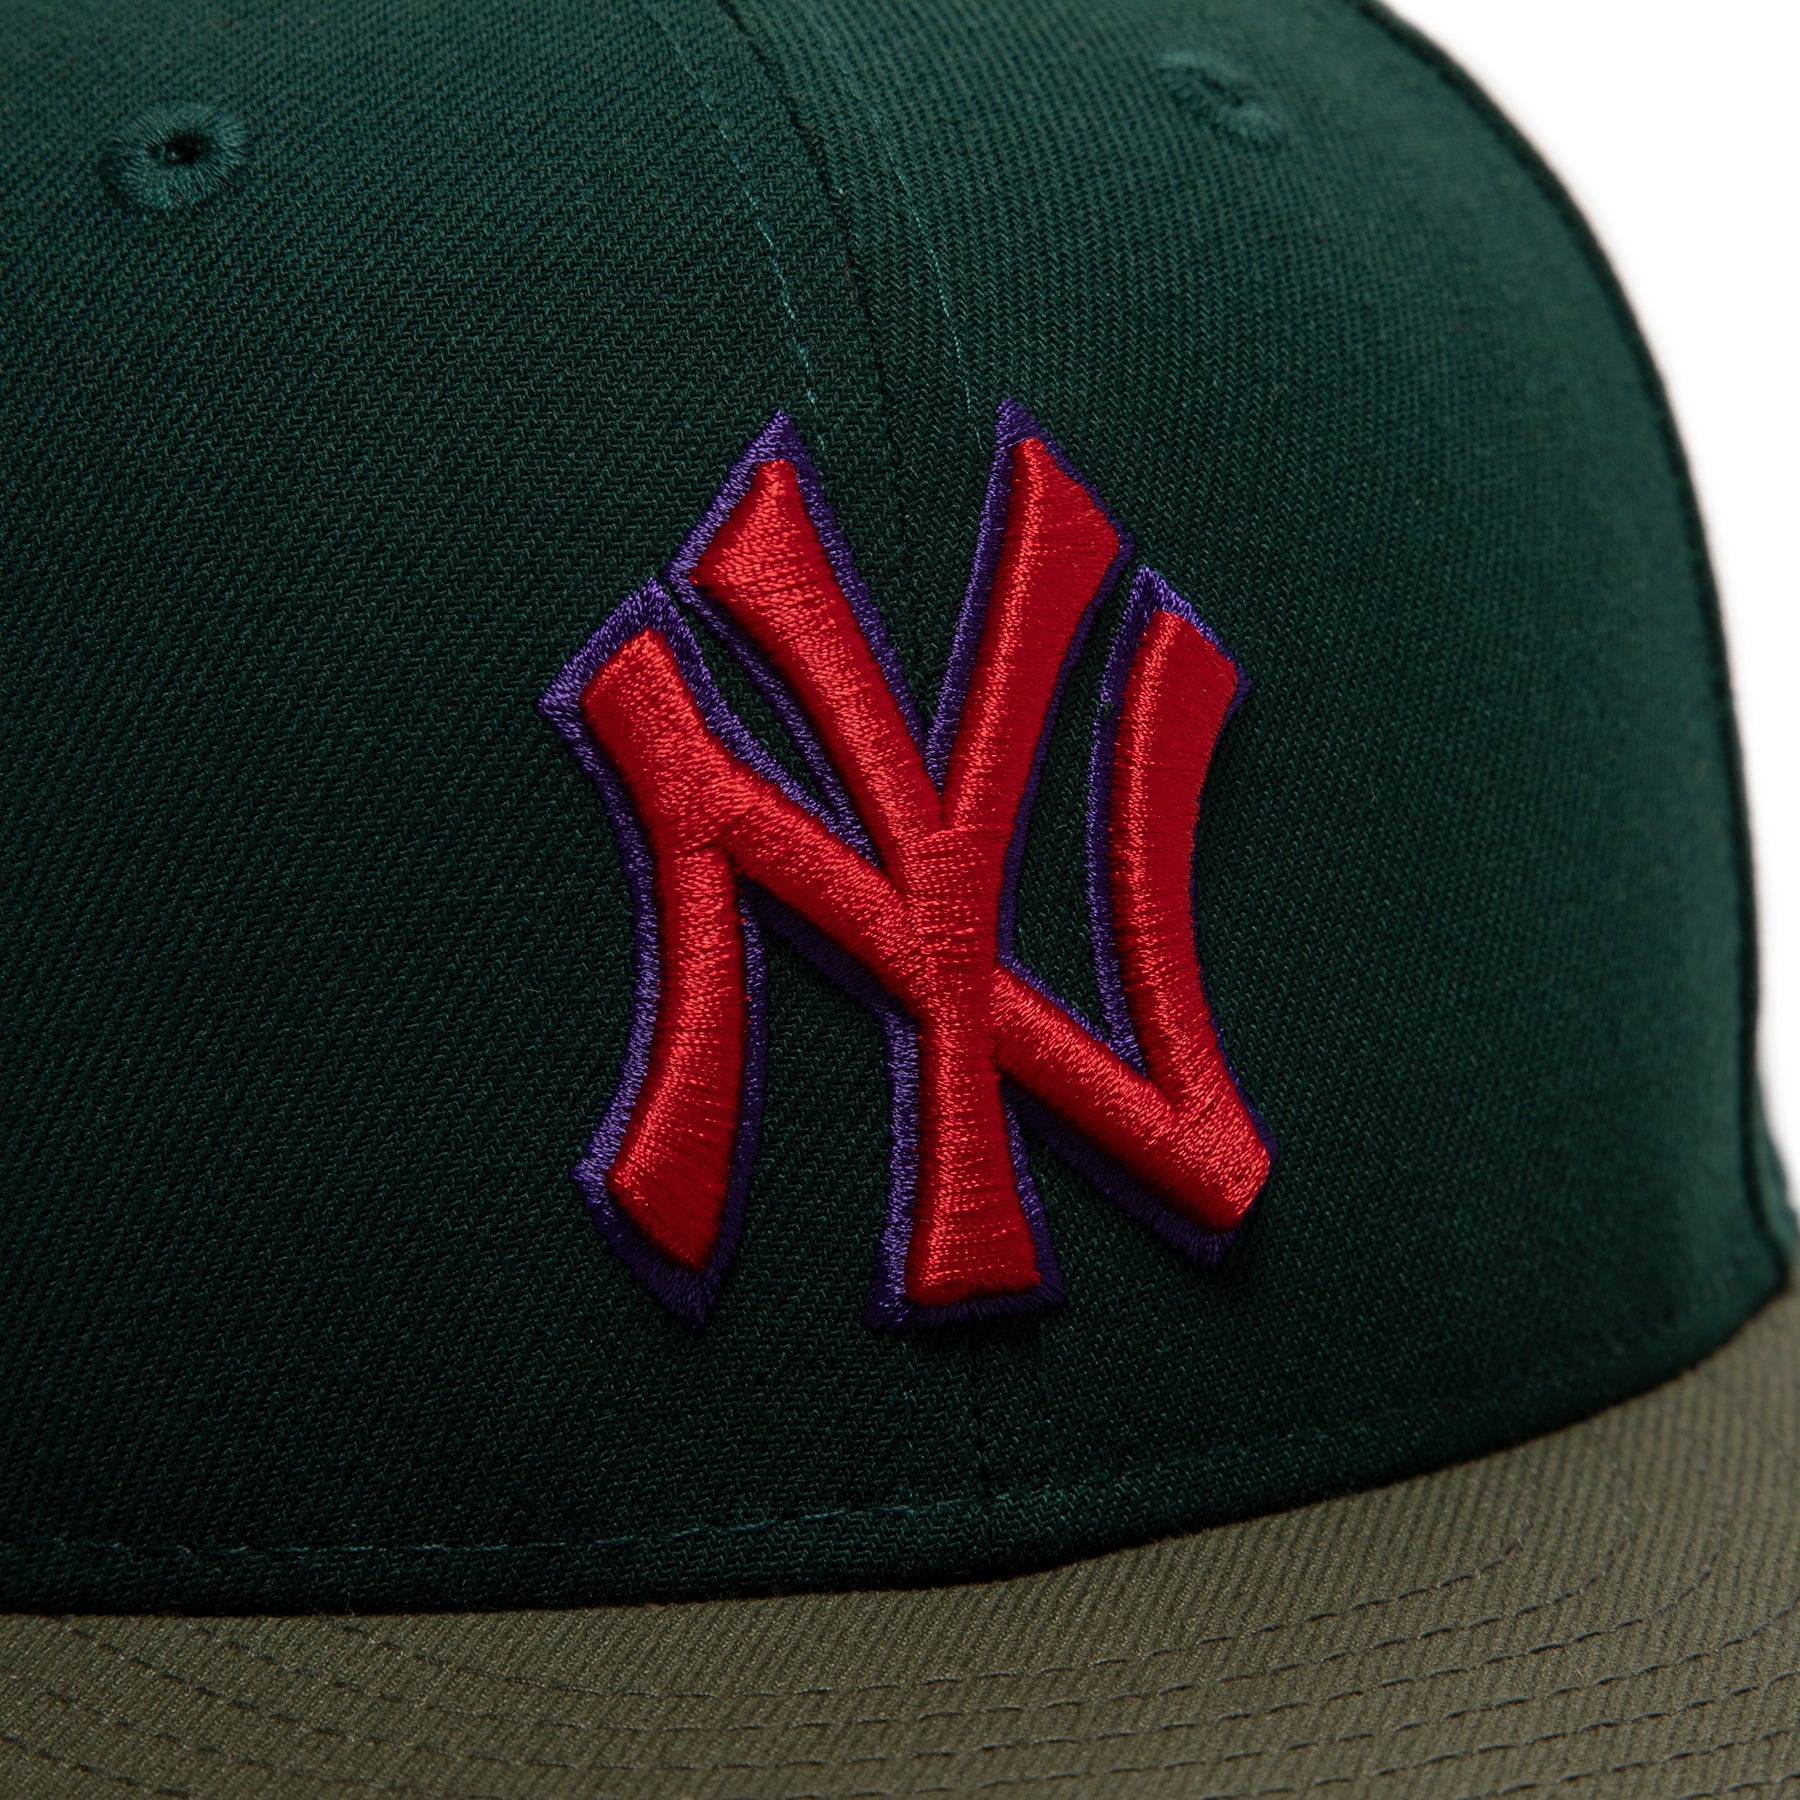 New Era Men 5950 New York Yankees Hat (Dark Green), Dark Green Pink / 8